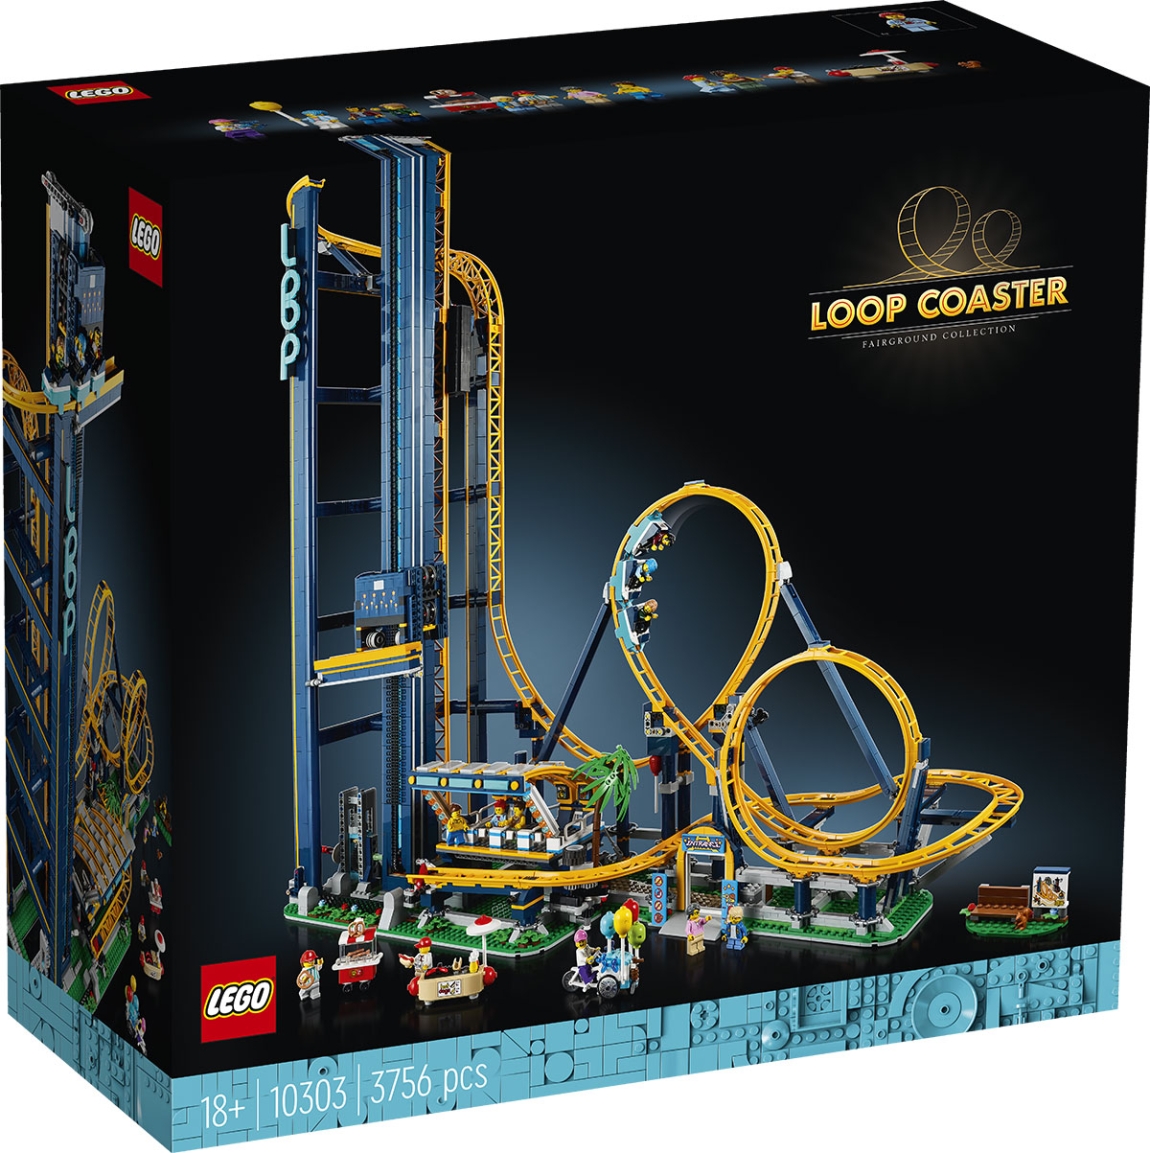 L’incredibile Loop Coaster Lego